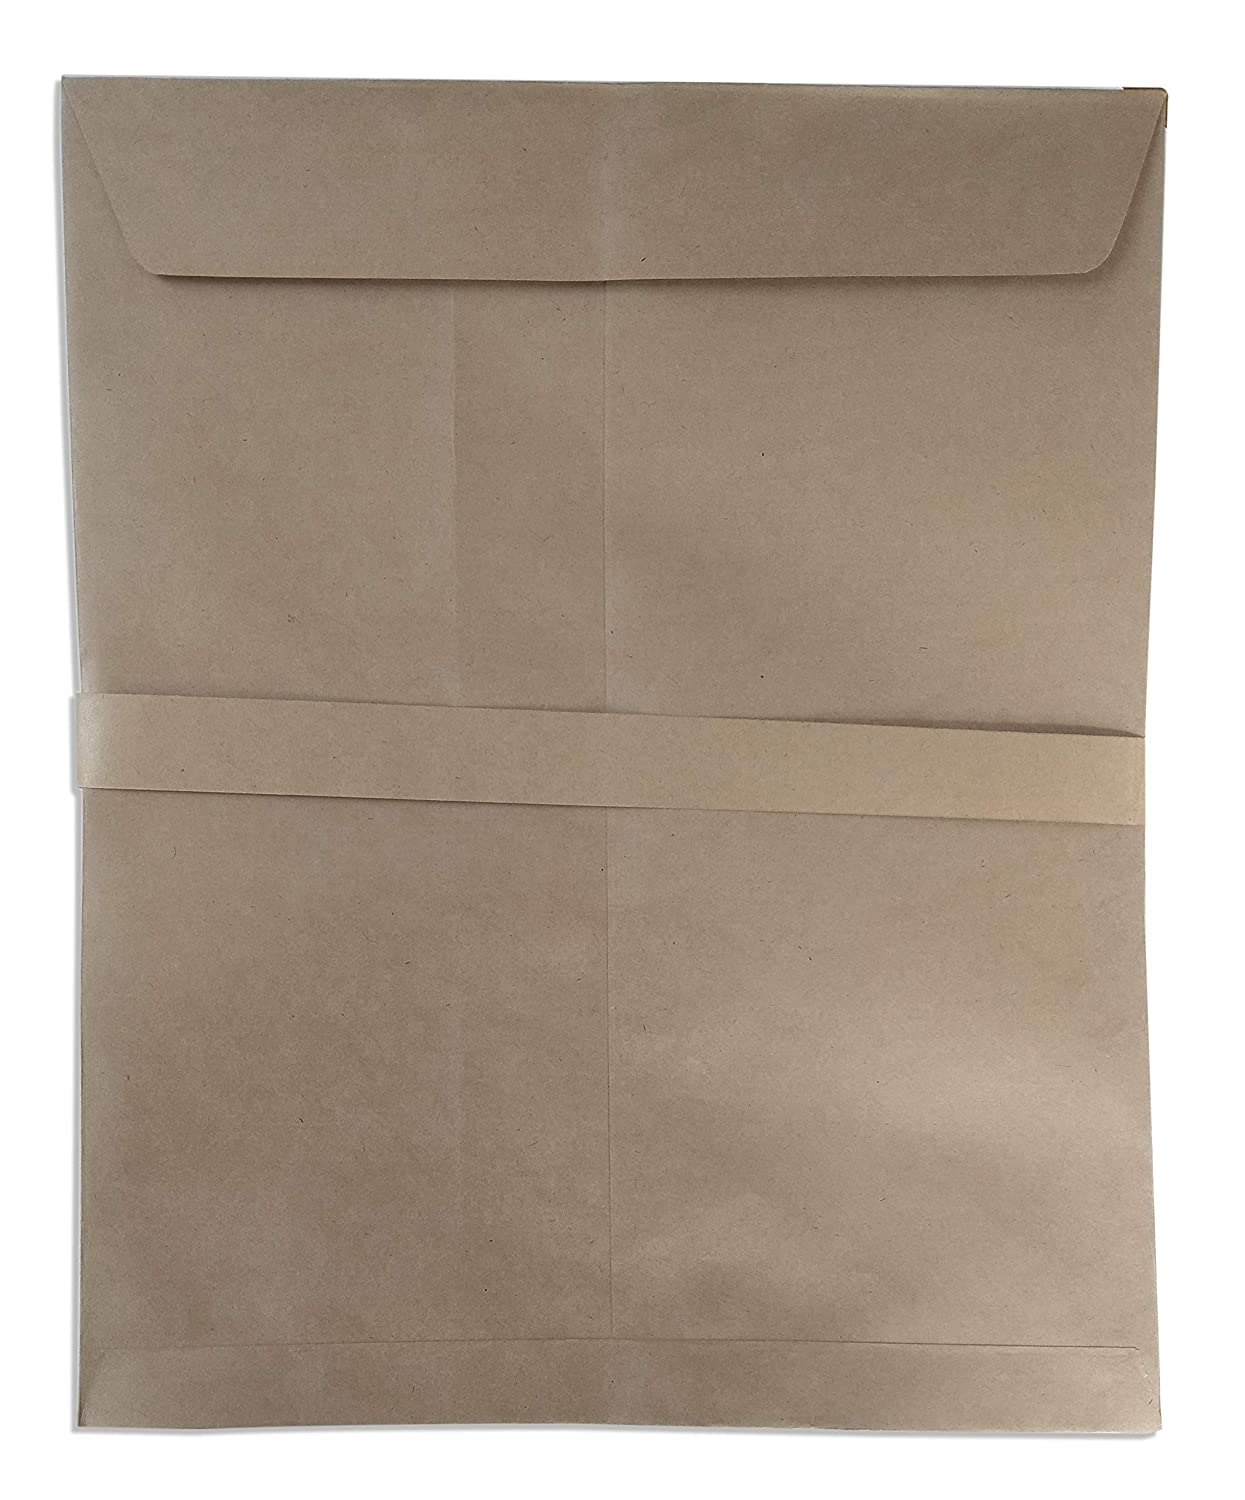 AccuPrints Brown Envelope Large | A4 Size Envelope | 10 X 12 Inch